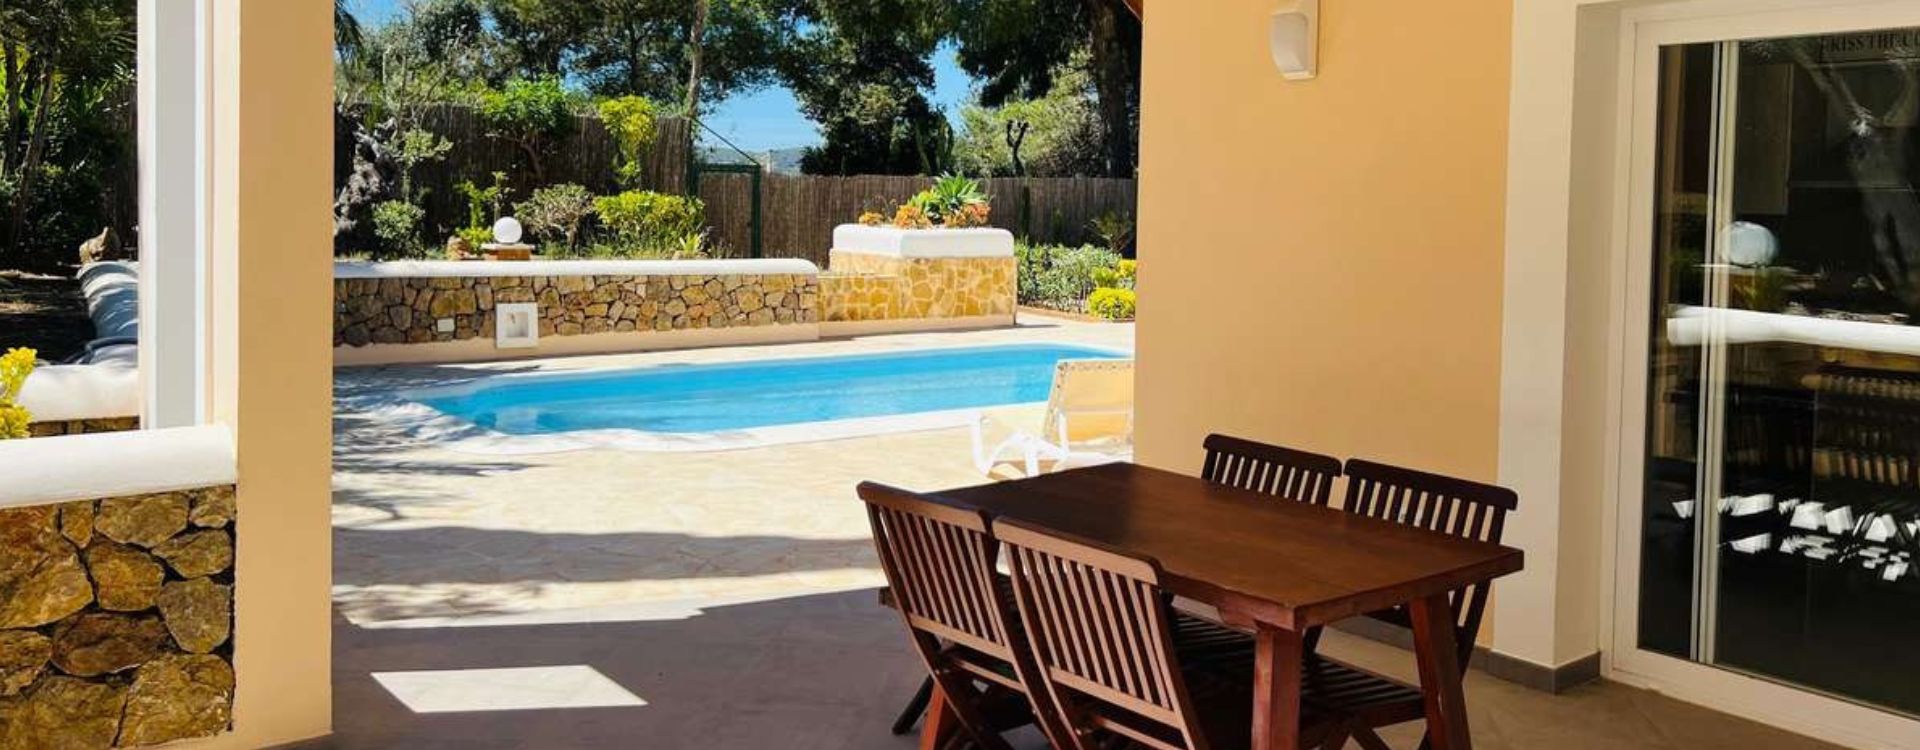 Ibiza, Ibizadesk, villa renting, swimming pool